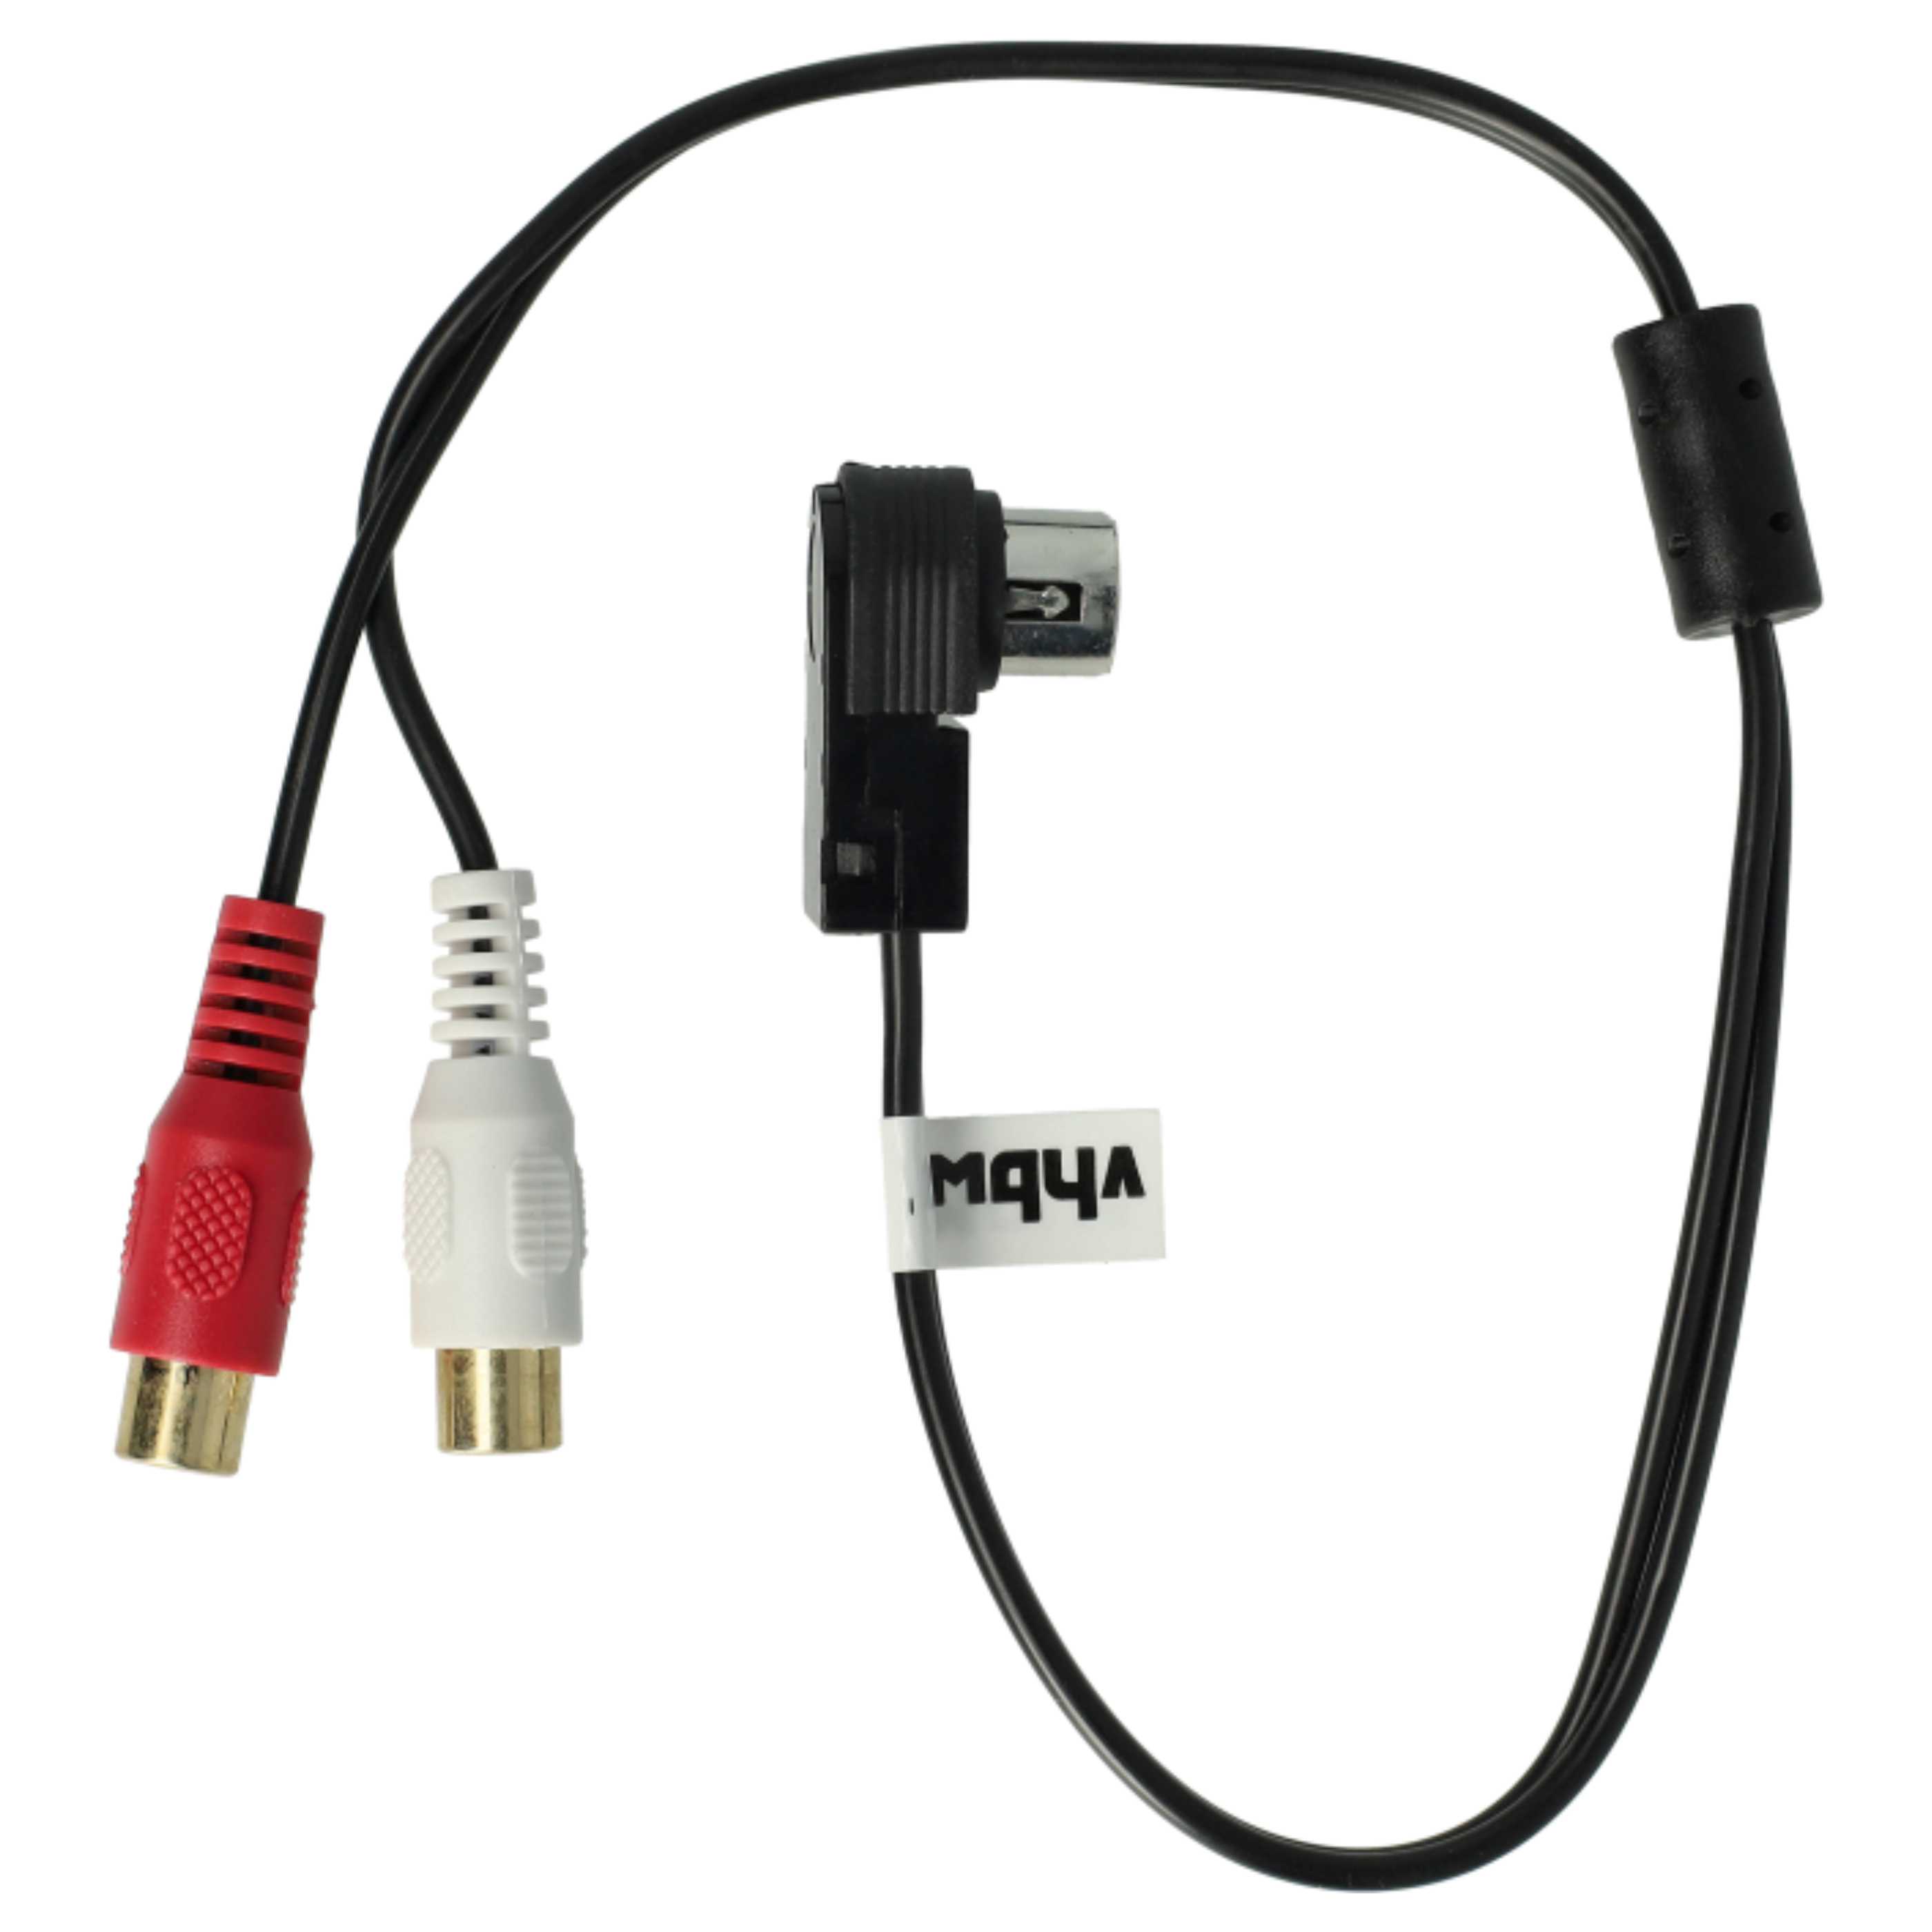 Audio Cable replaces JVC KS-U57 for Car Radio - 60 cm long